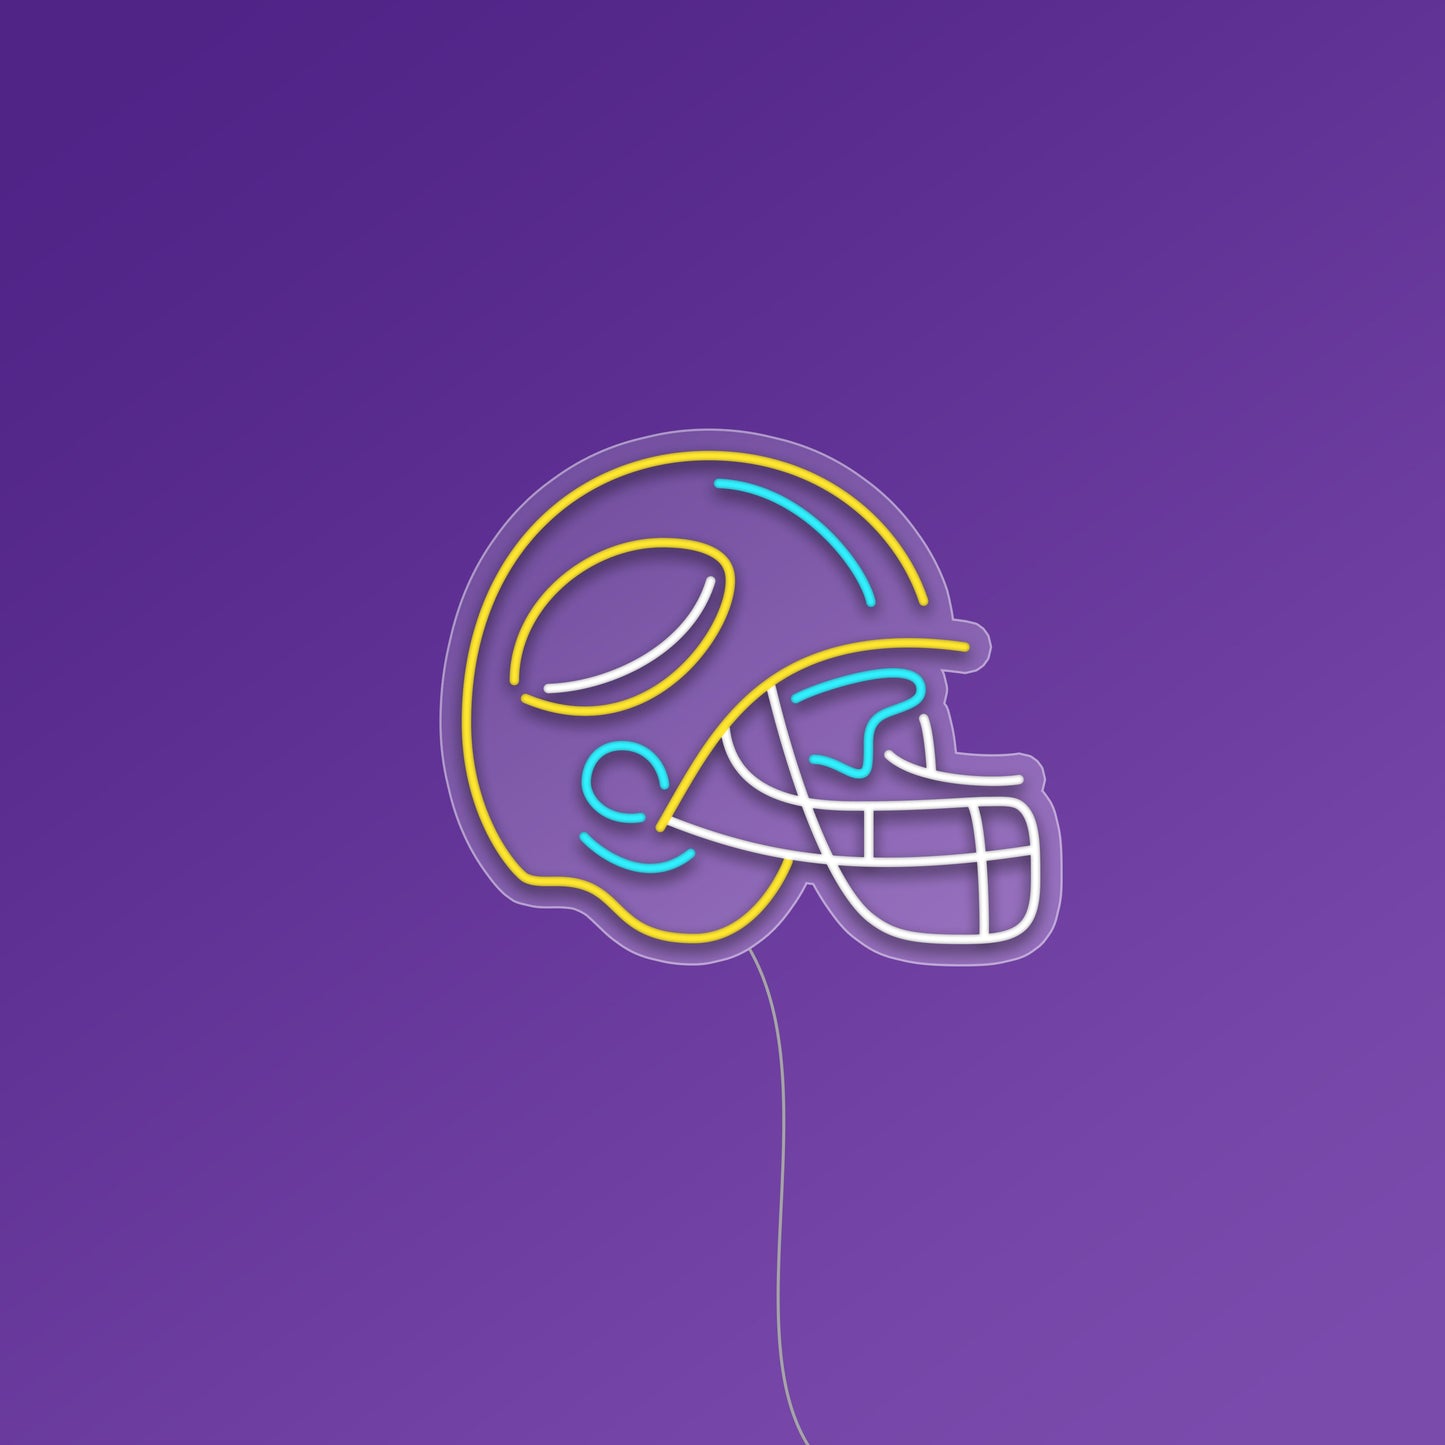 NFL Helmet